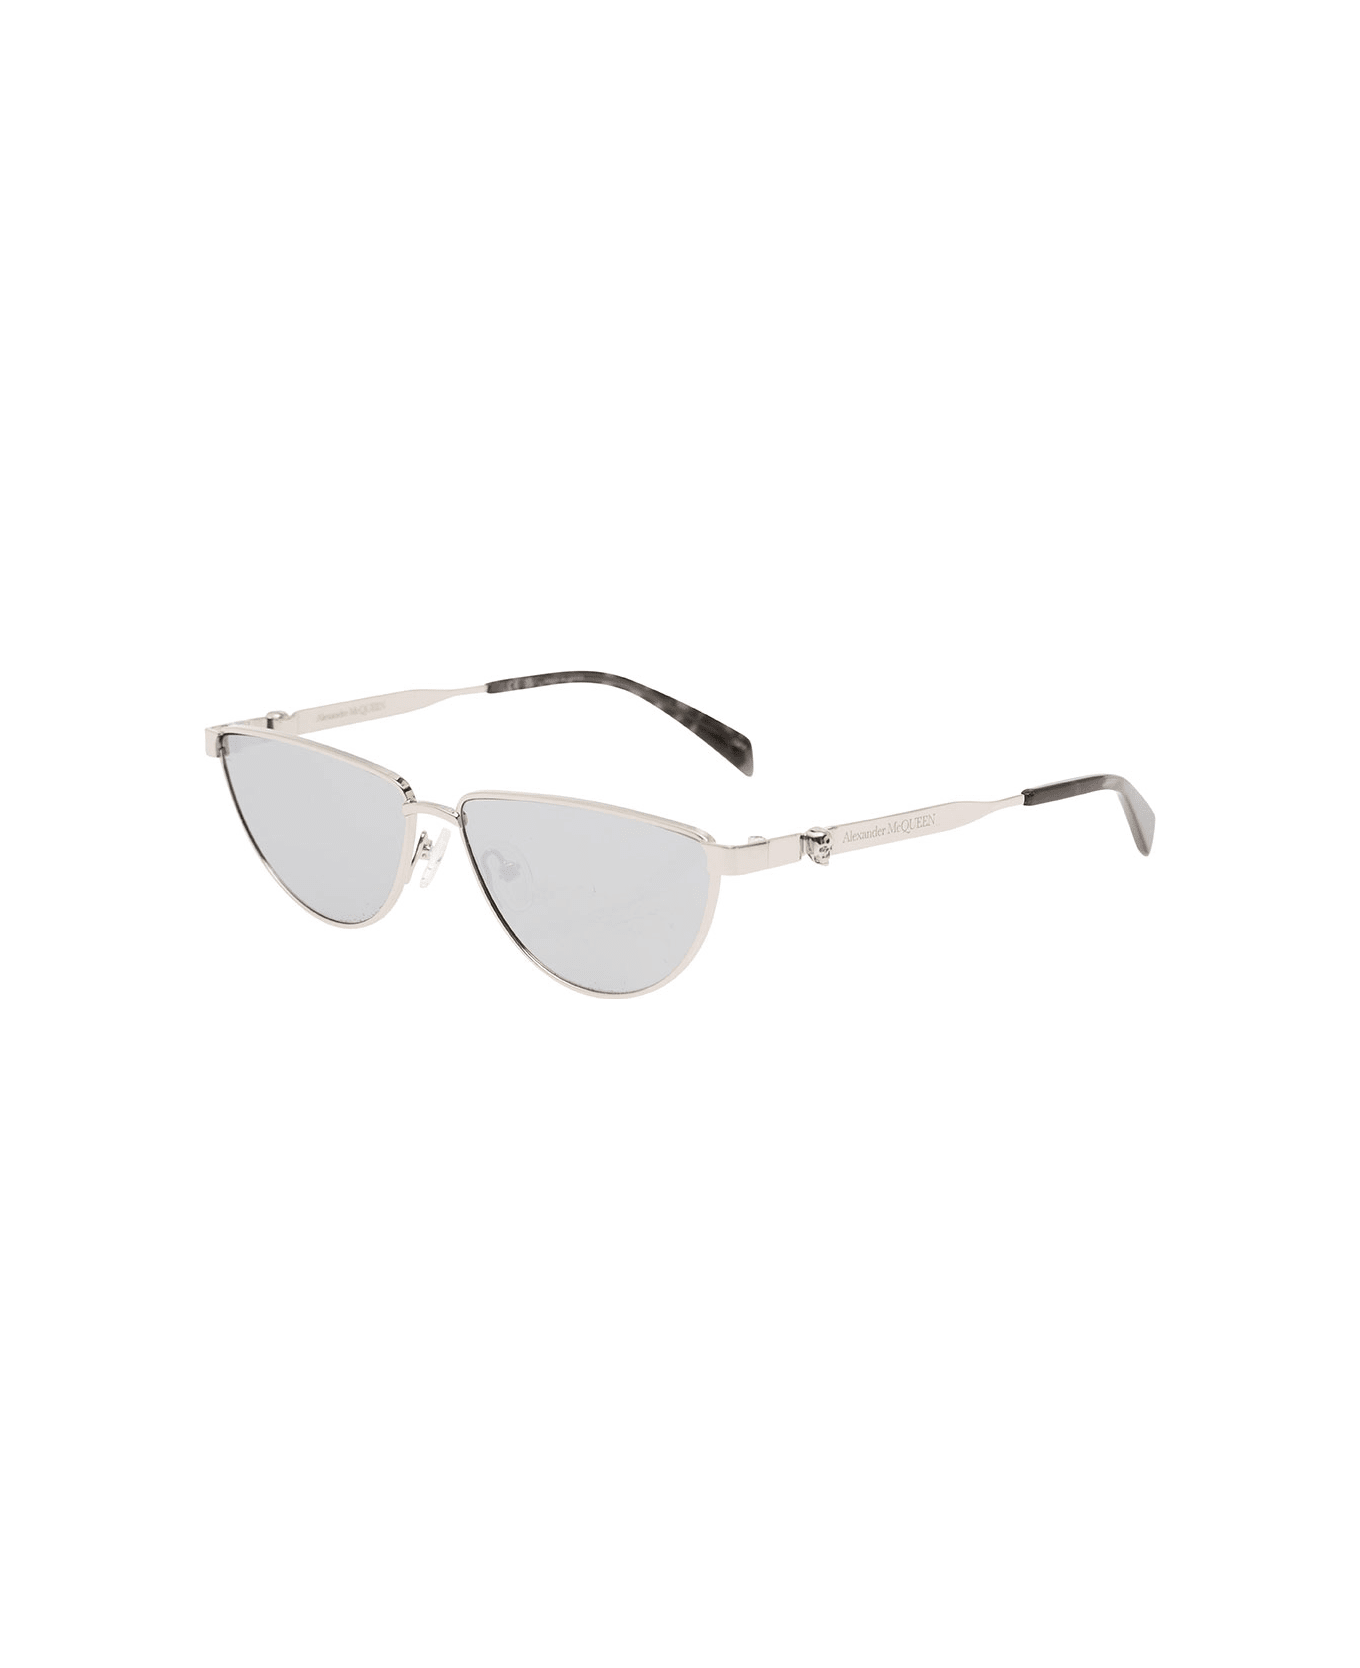 Alexander McQueen Silver-tone Sunglasses With Metal Frame Woman - Metallic